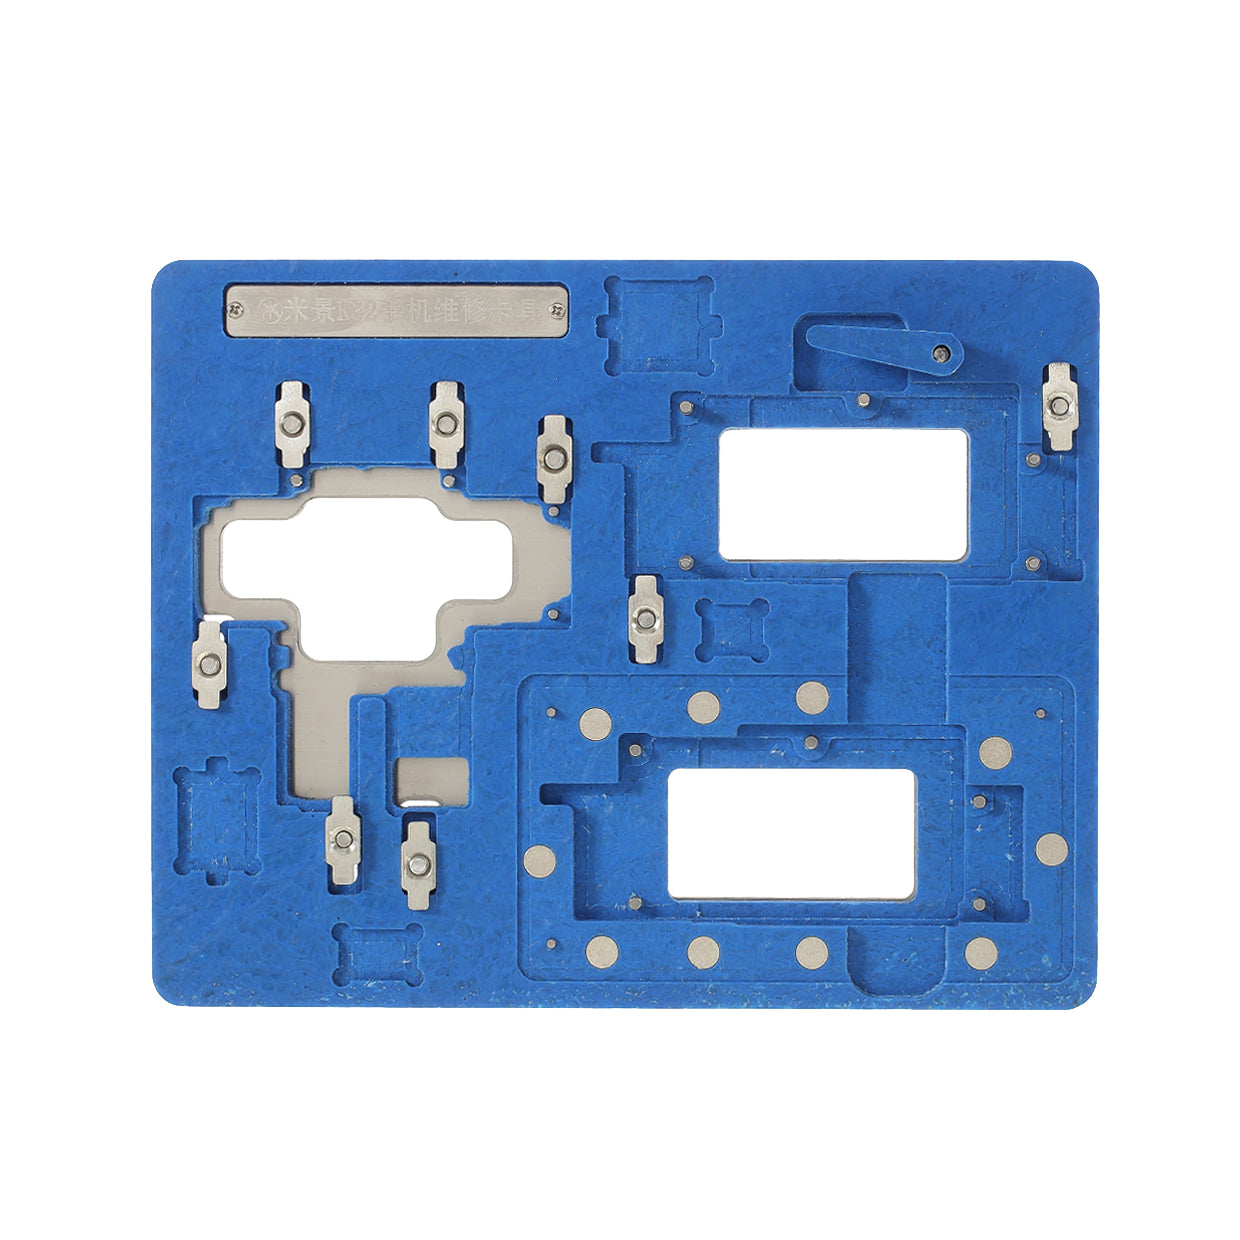 MIJING K32 PCB Fixtures Repair Holder Platform Tool for iPhone 11 Pro Max